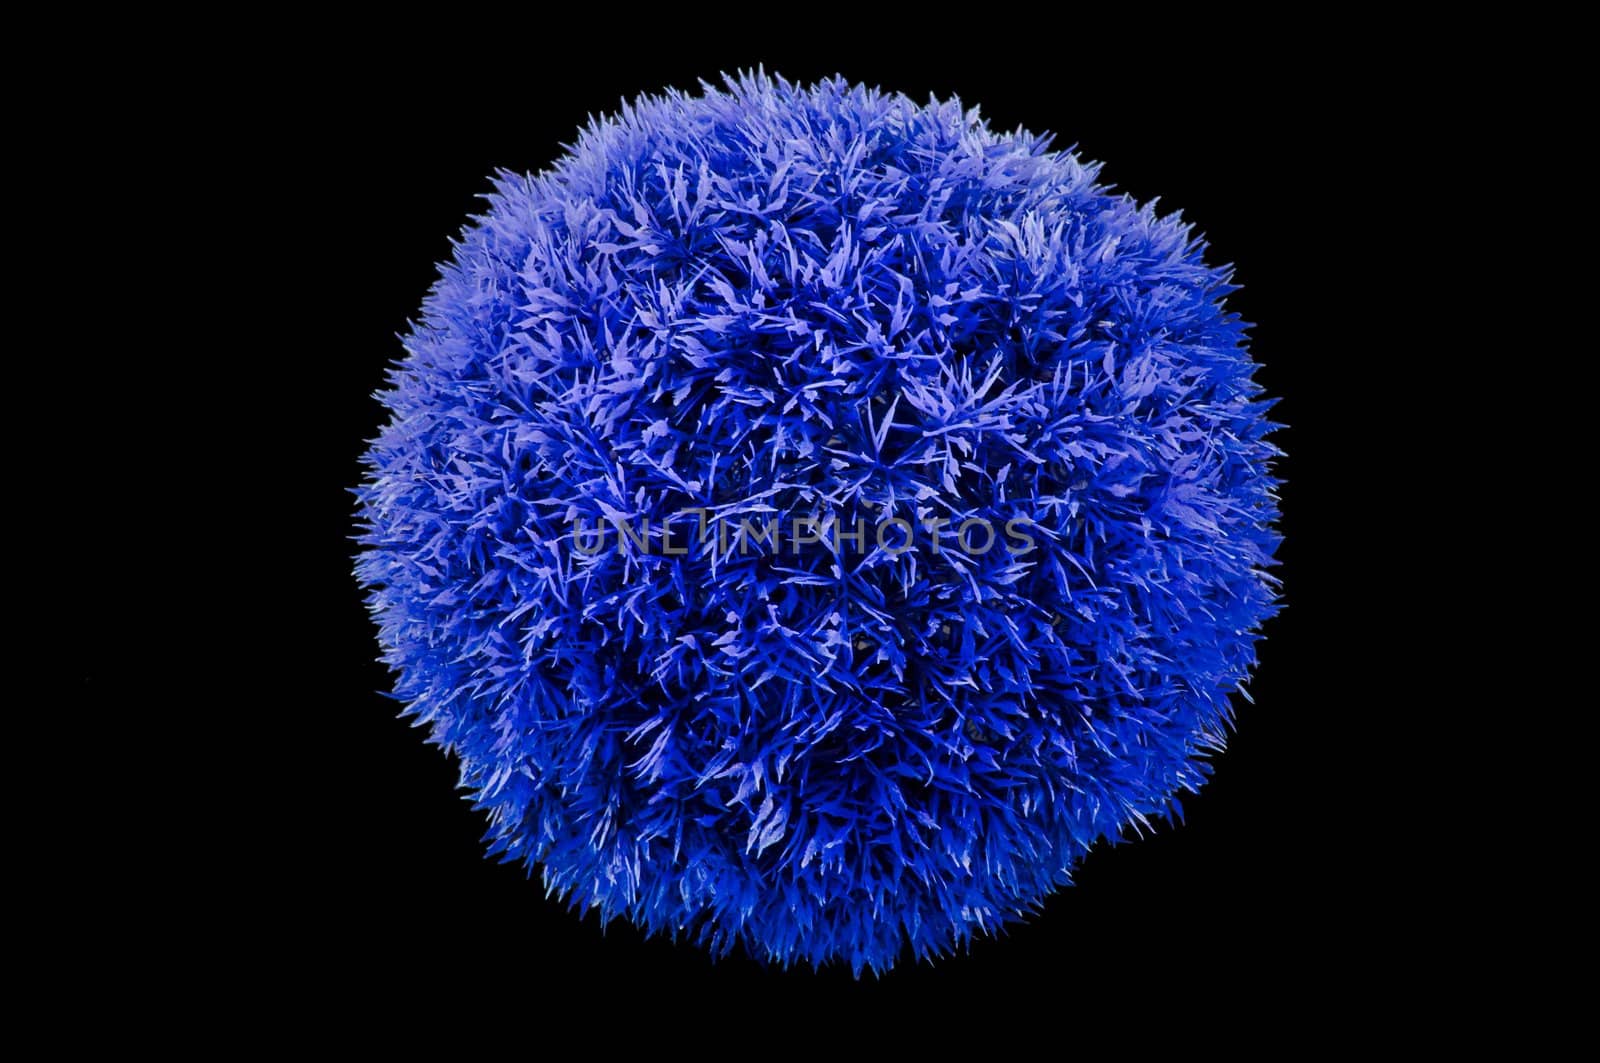 Big blue ball by rigamondis